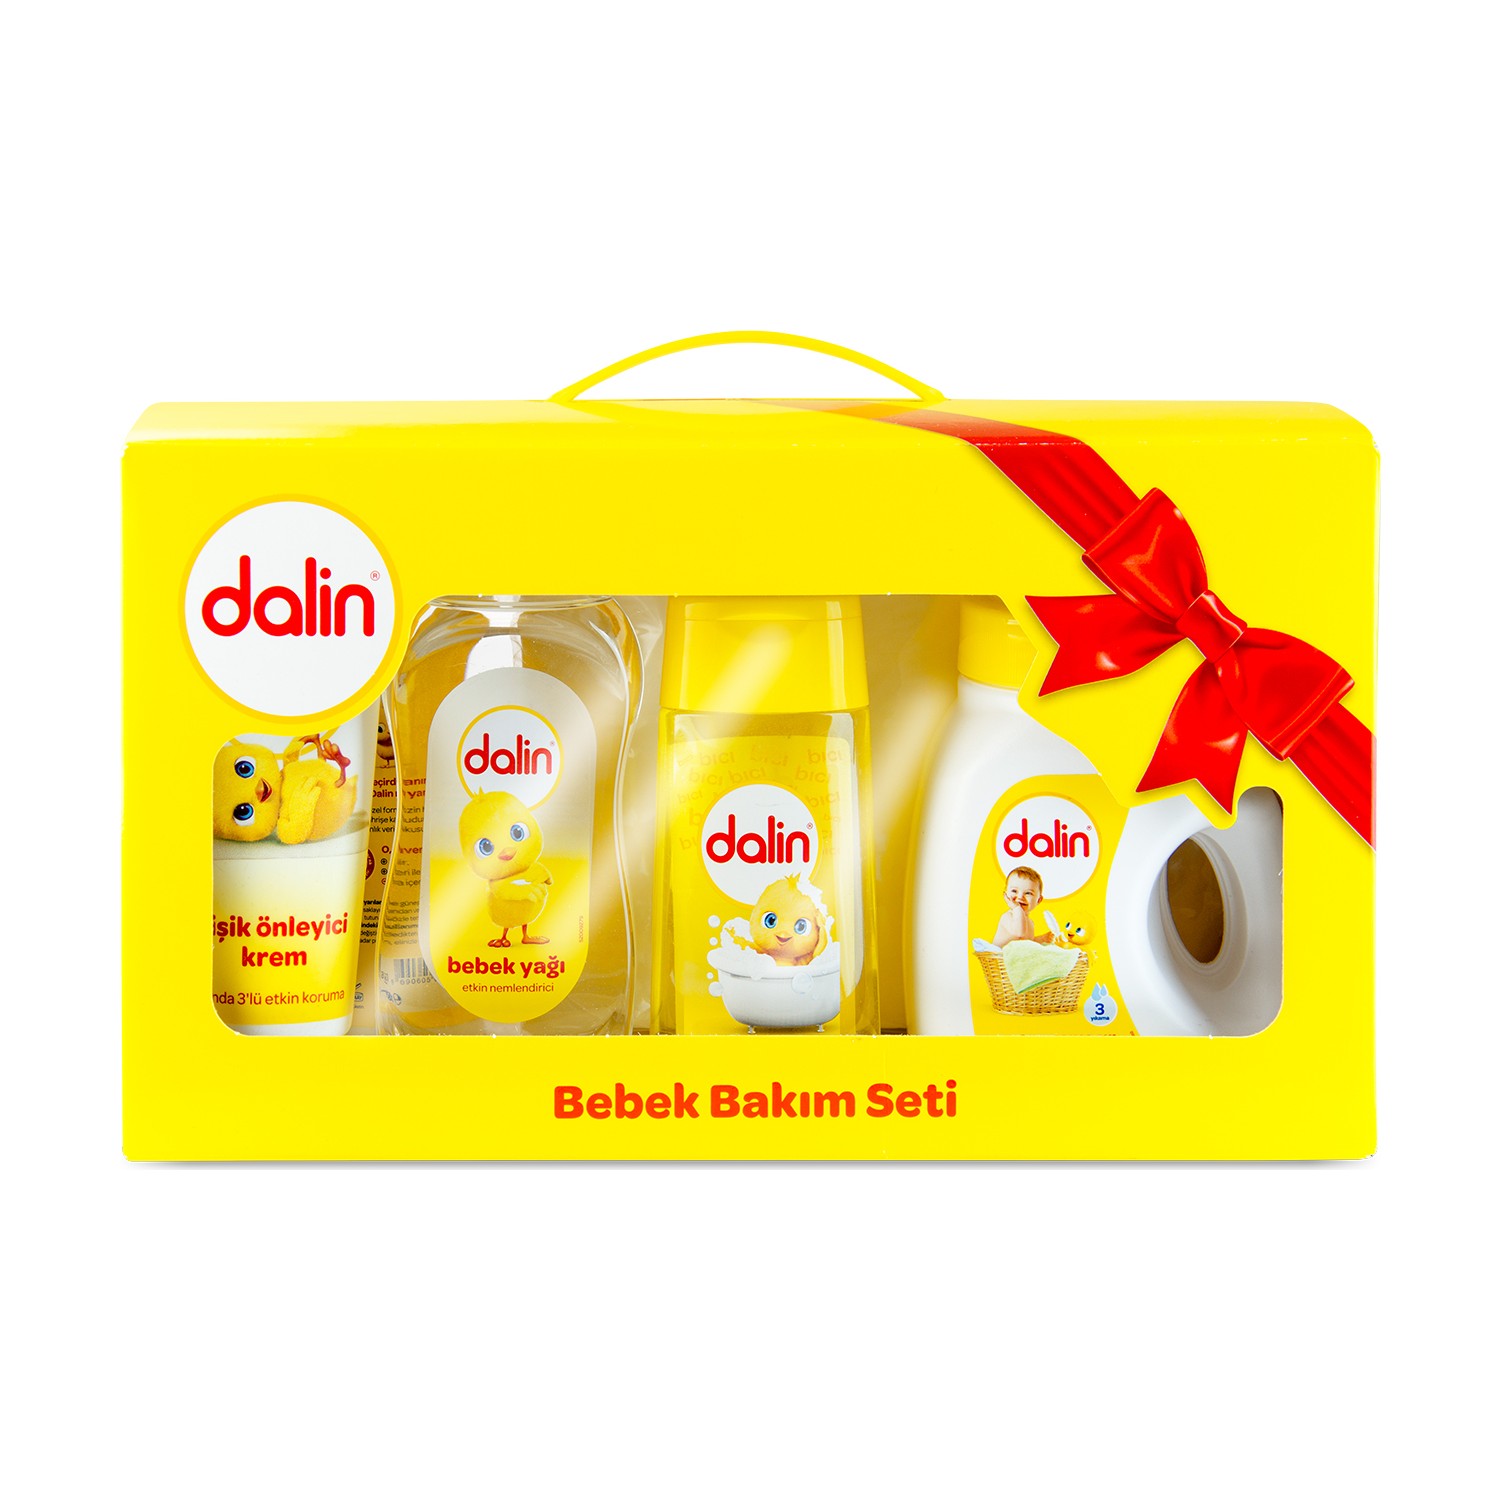 Dalin Baby Care Gift Set